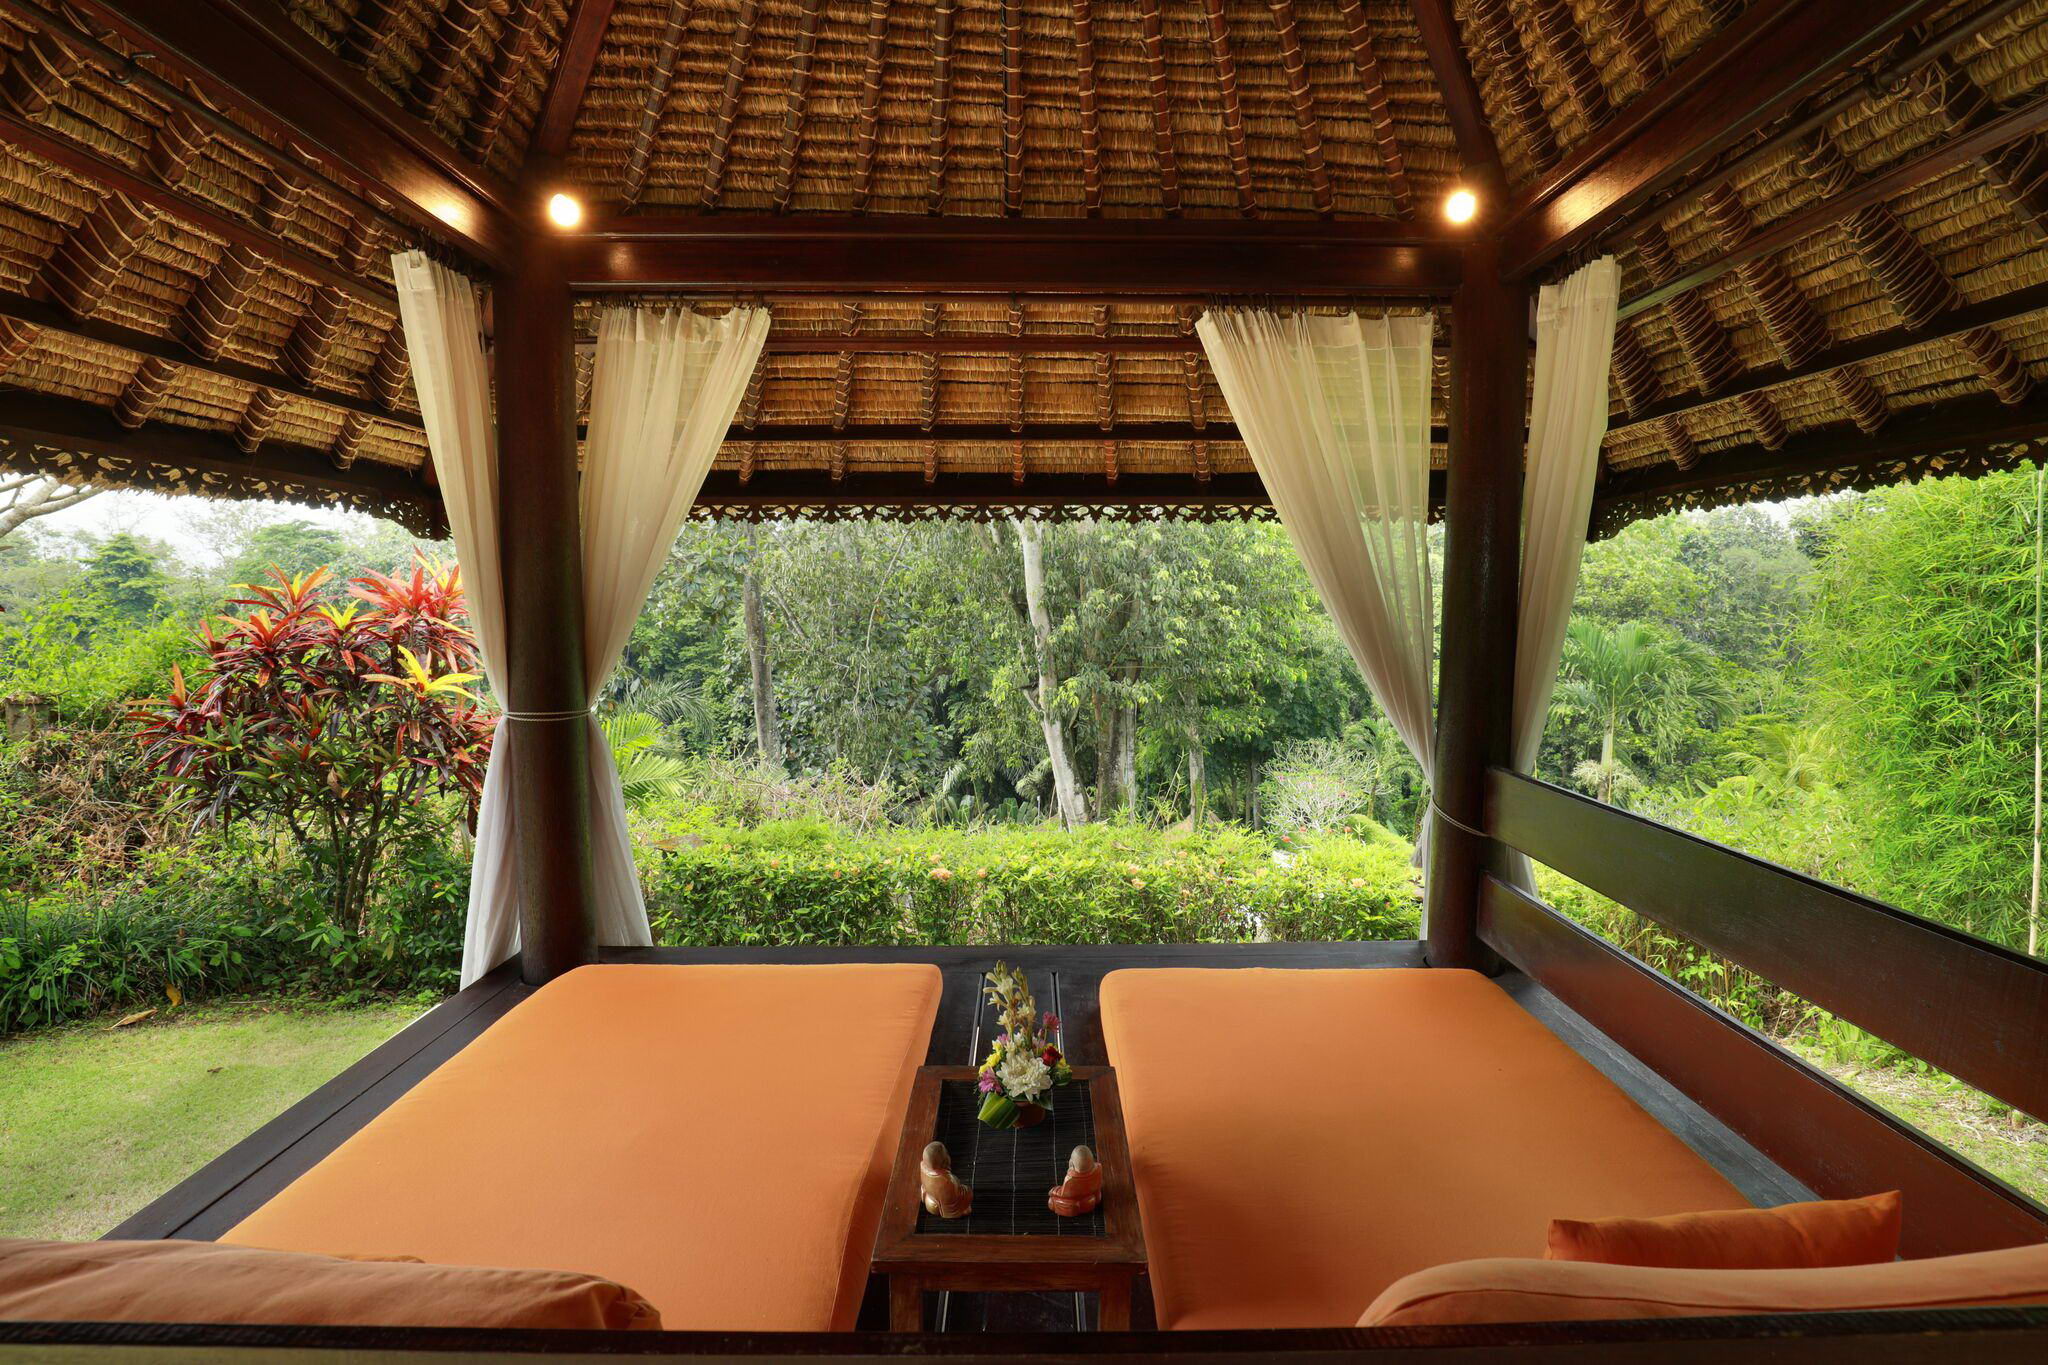 Bali Feminine Yoga & Self Development Retreat- Jun 7-12th 2020 - Shared Occupancy, 1 Bed Private Pool Villa